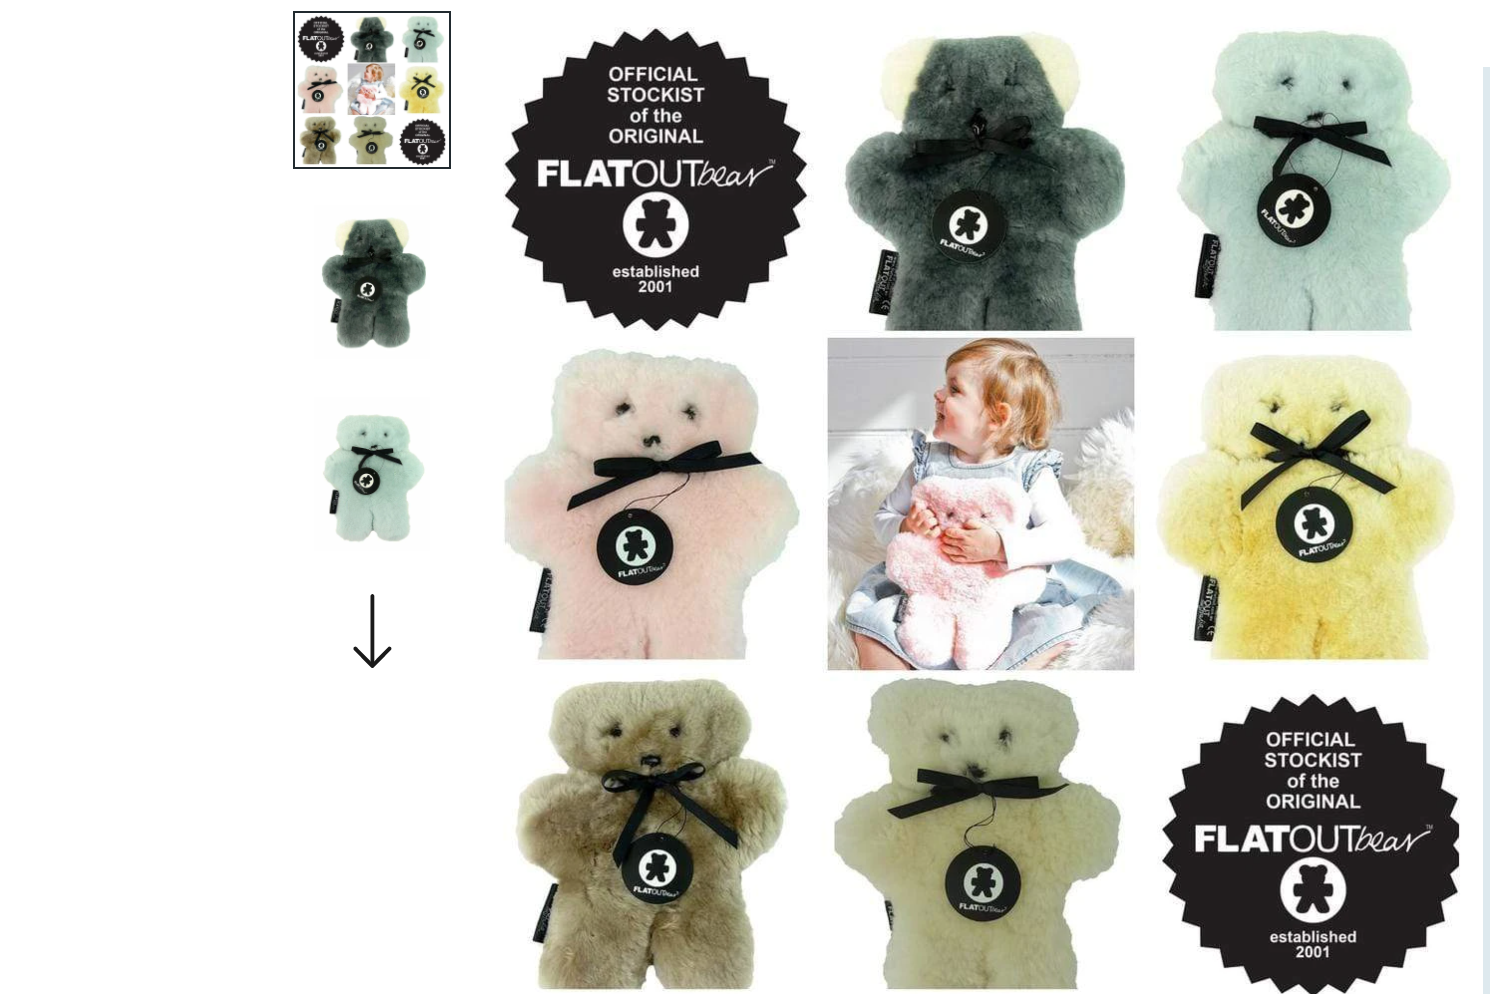 FLATOUT bear - made from 100% australian sheepskin